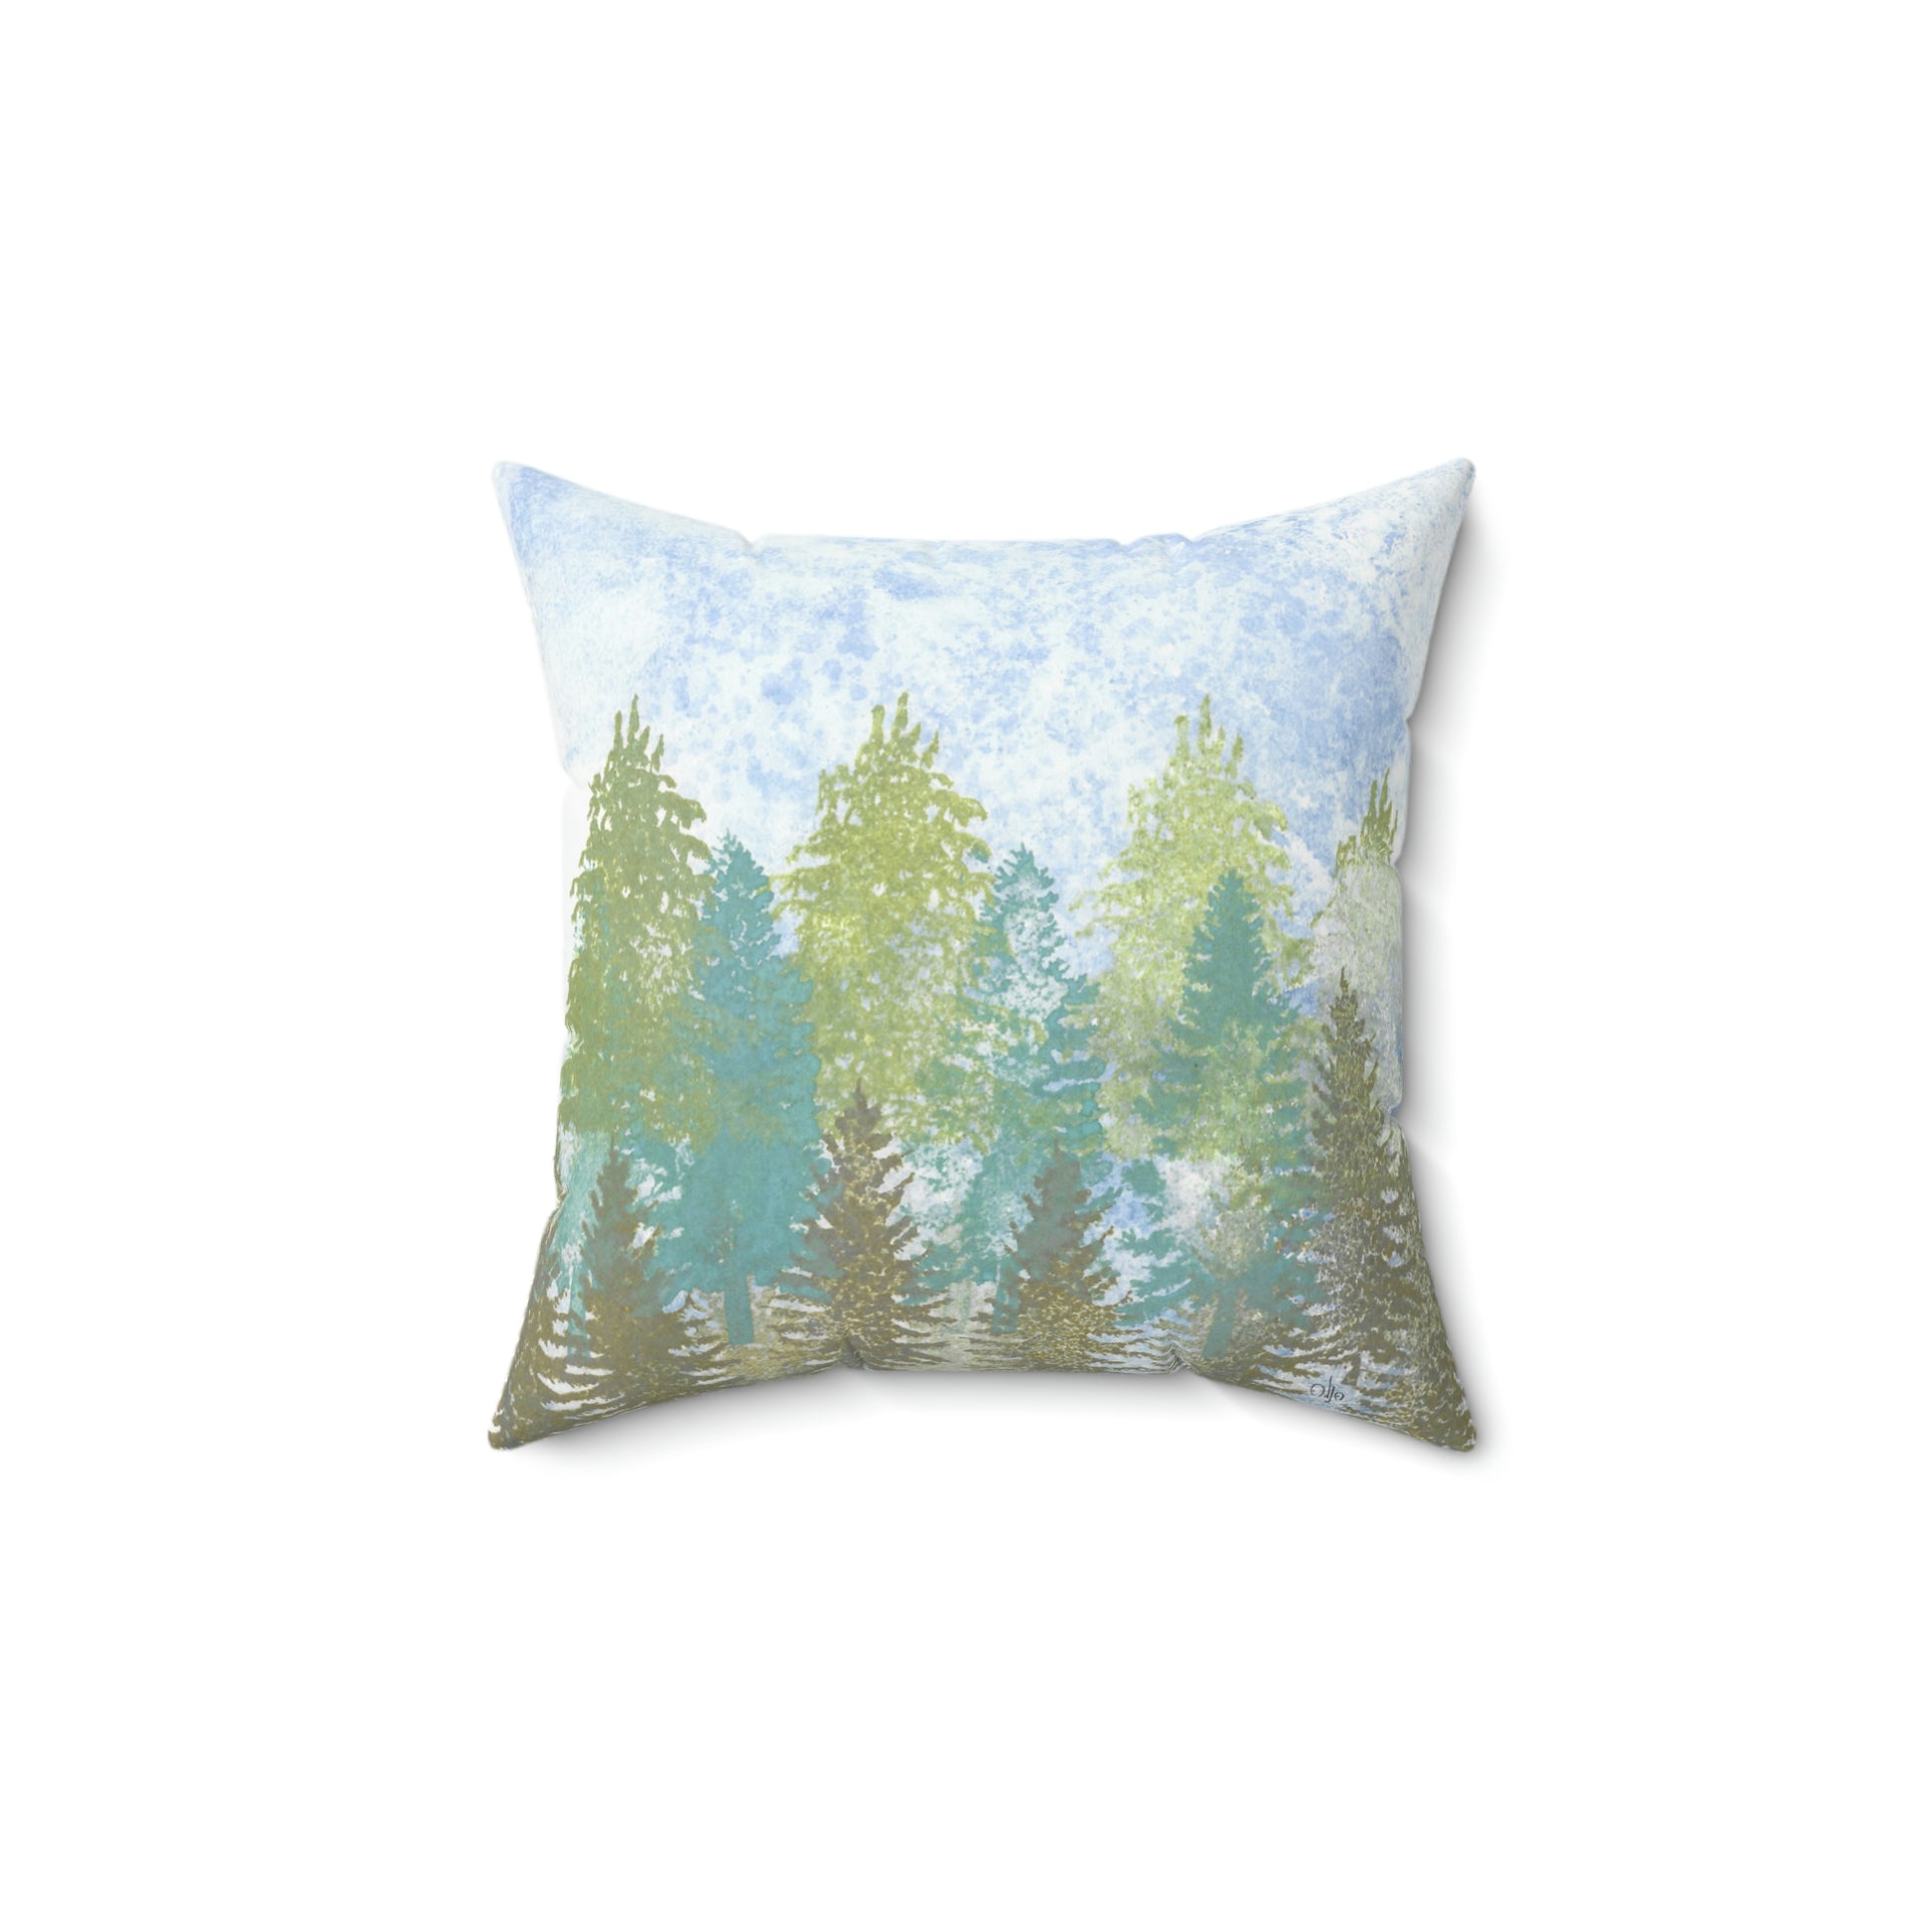 Evergreen Forest Square Pillow - Alja Design